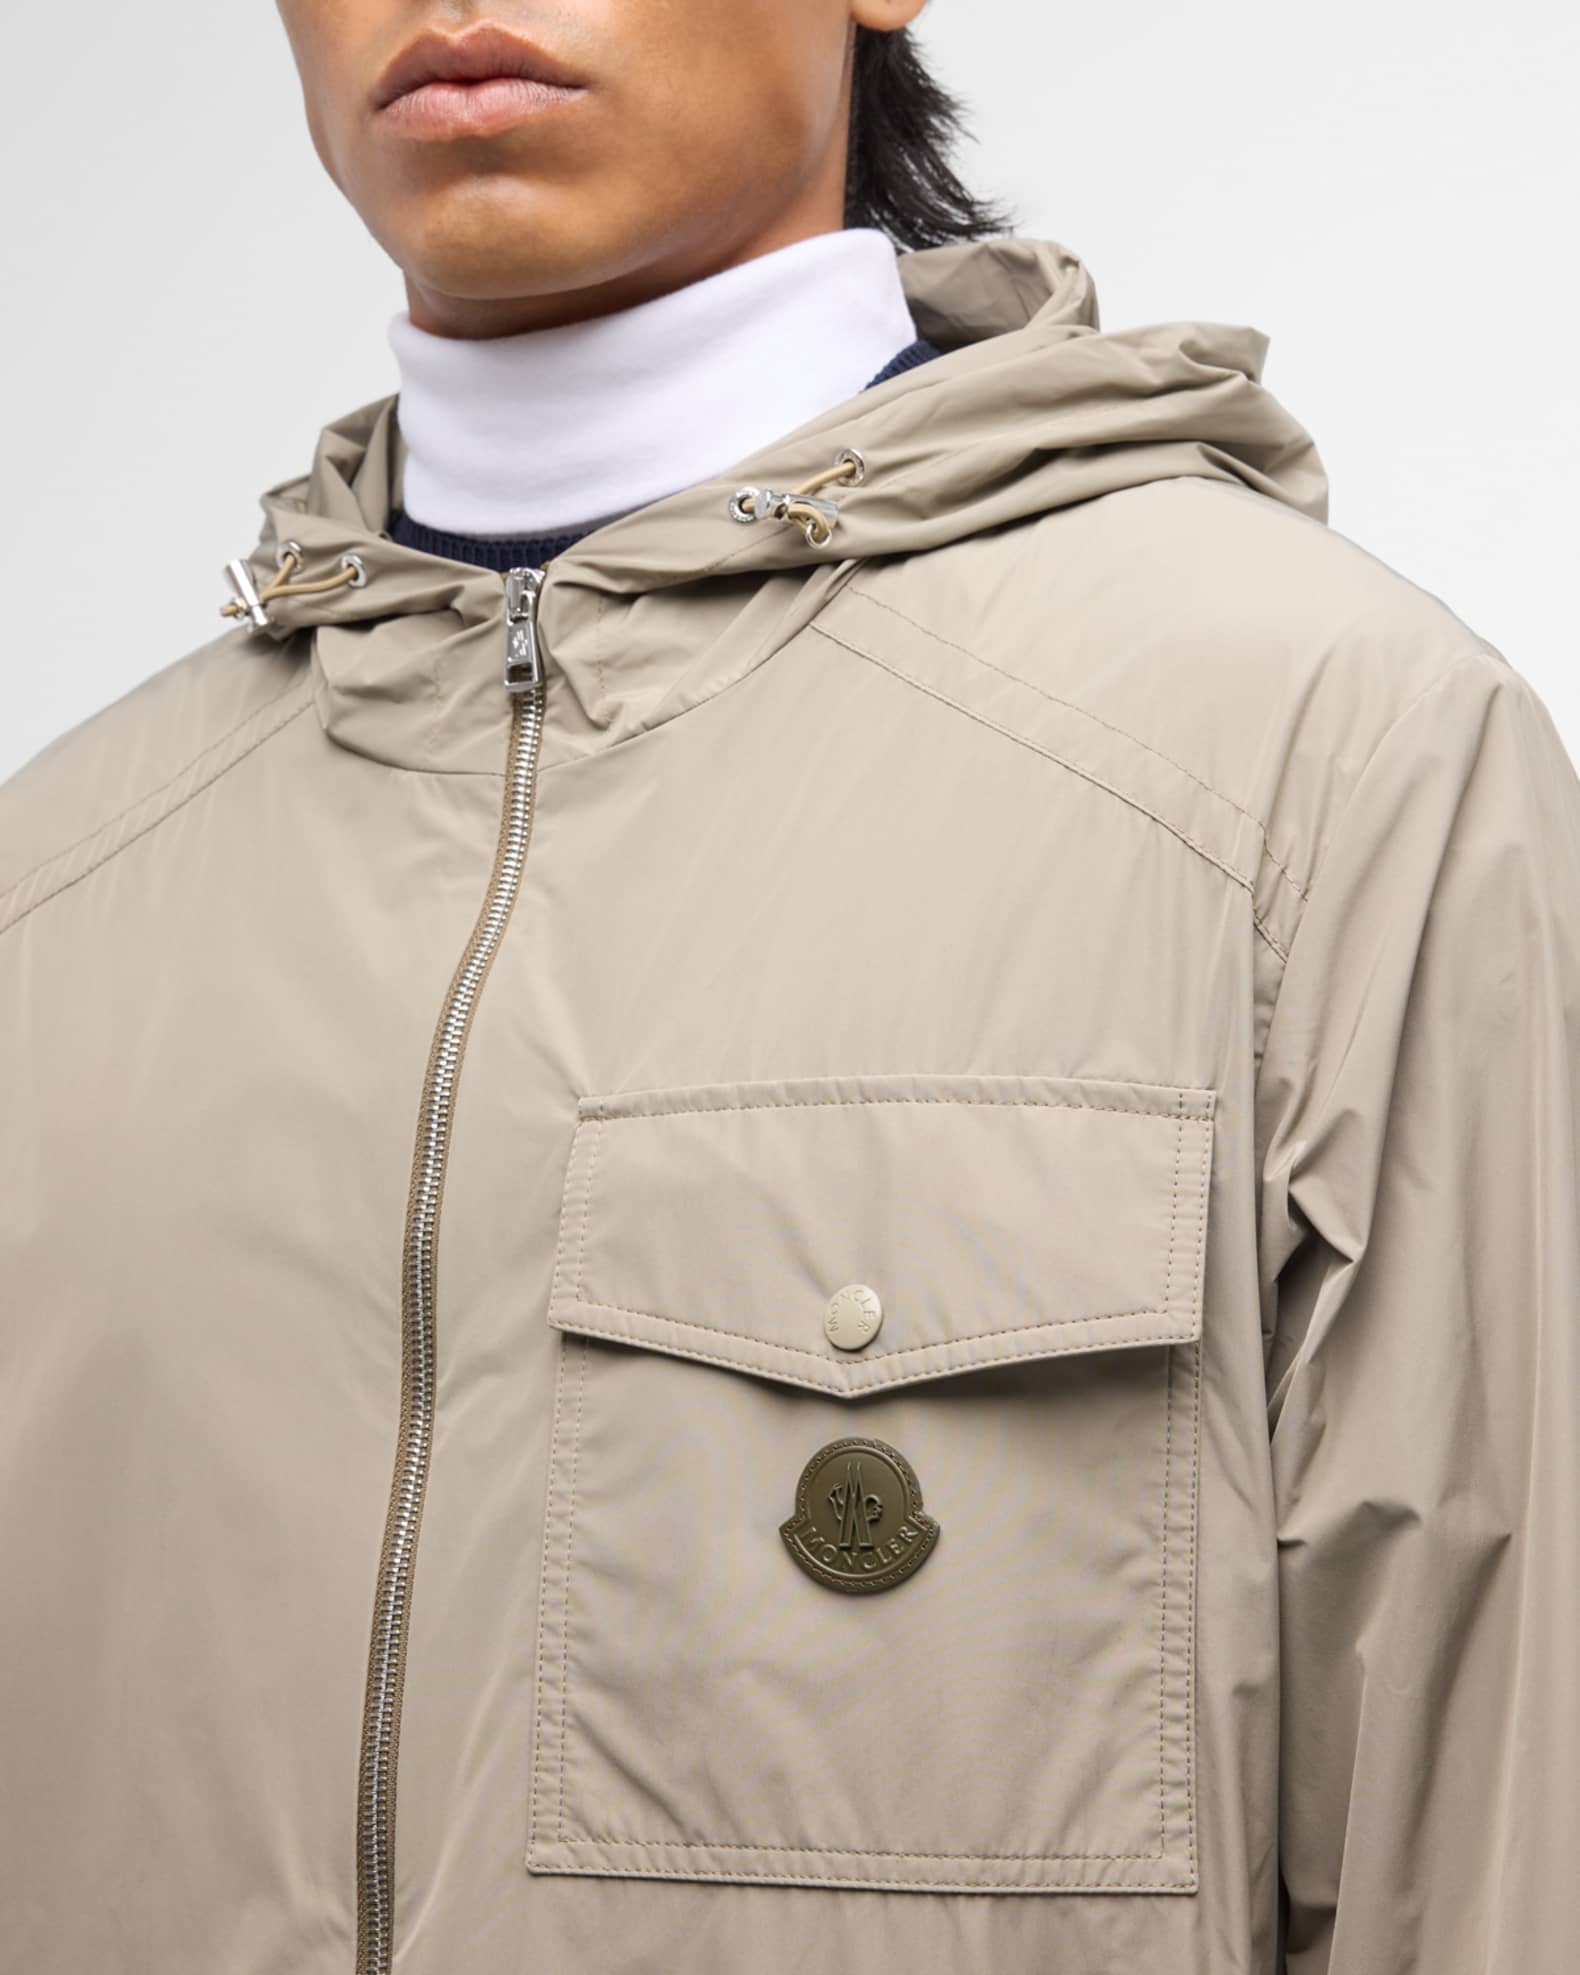 Fuyue Zip Up Jacket in Green - Moncler